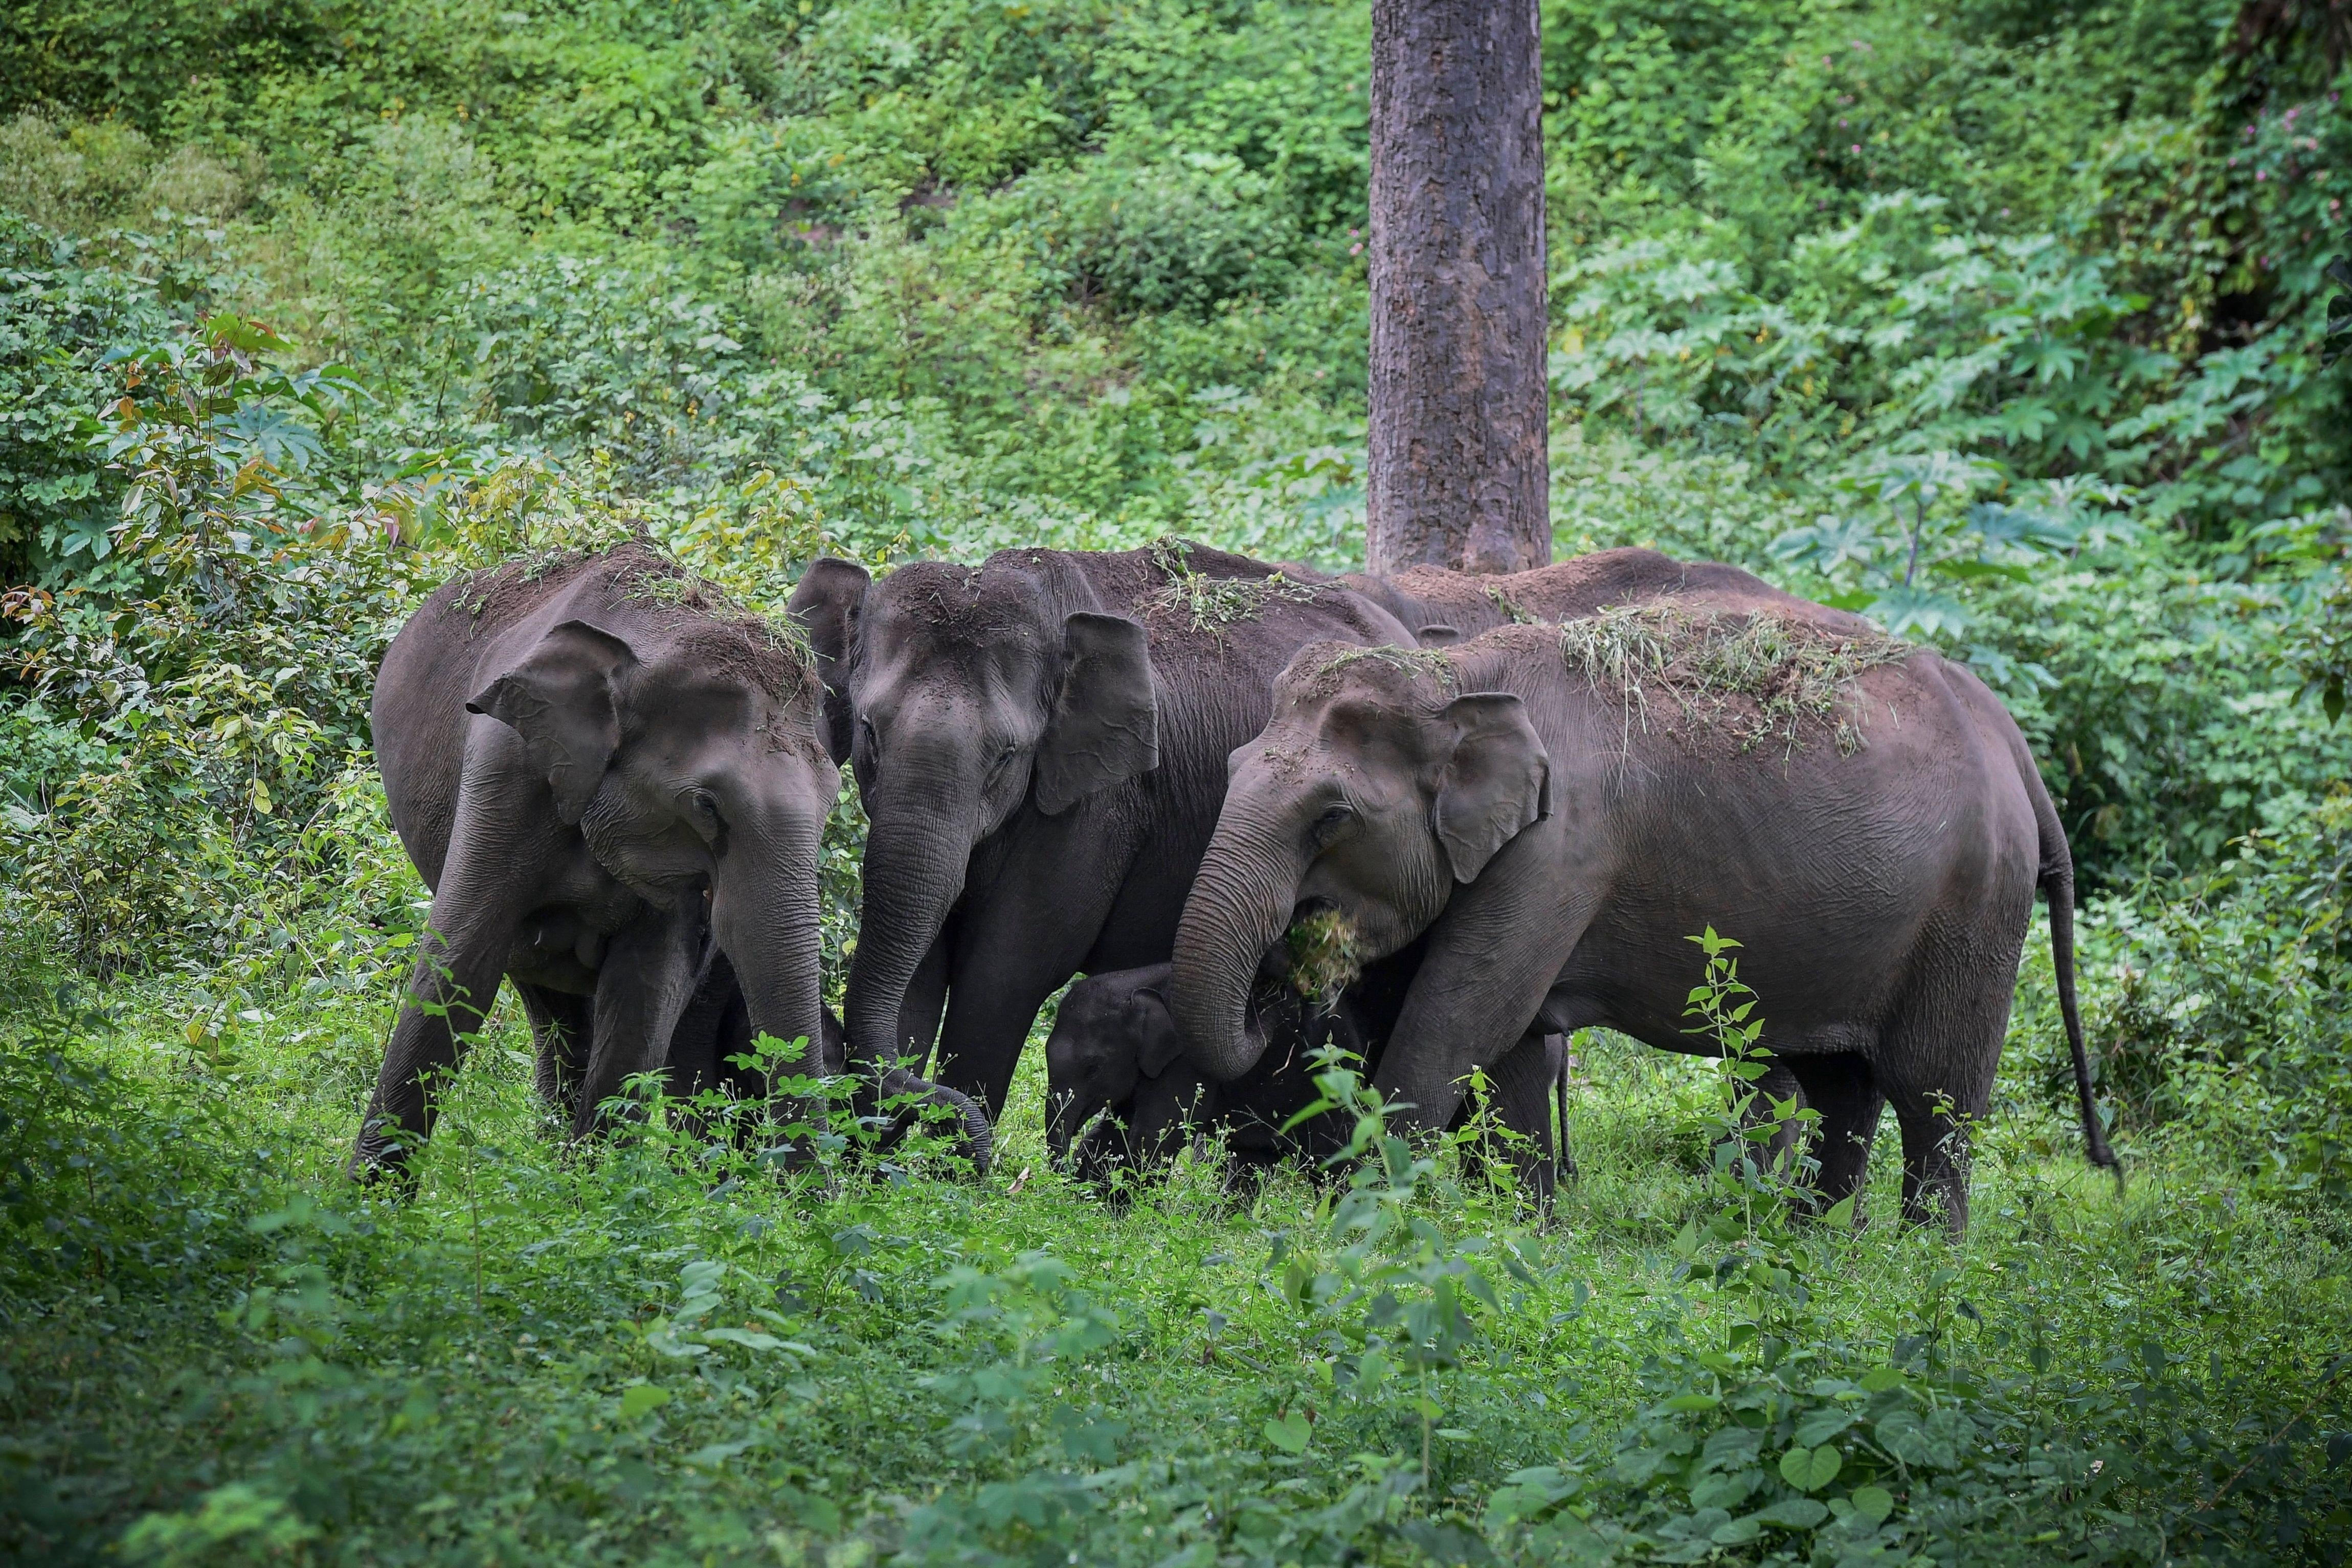 A herd of elephants in the wild